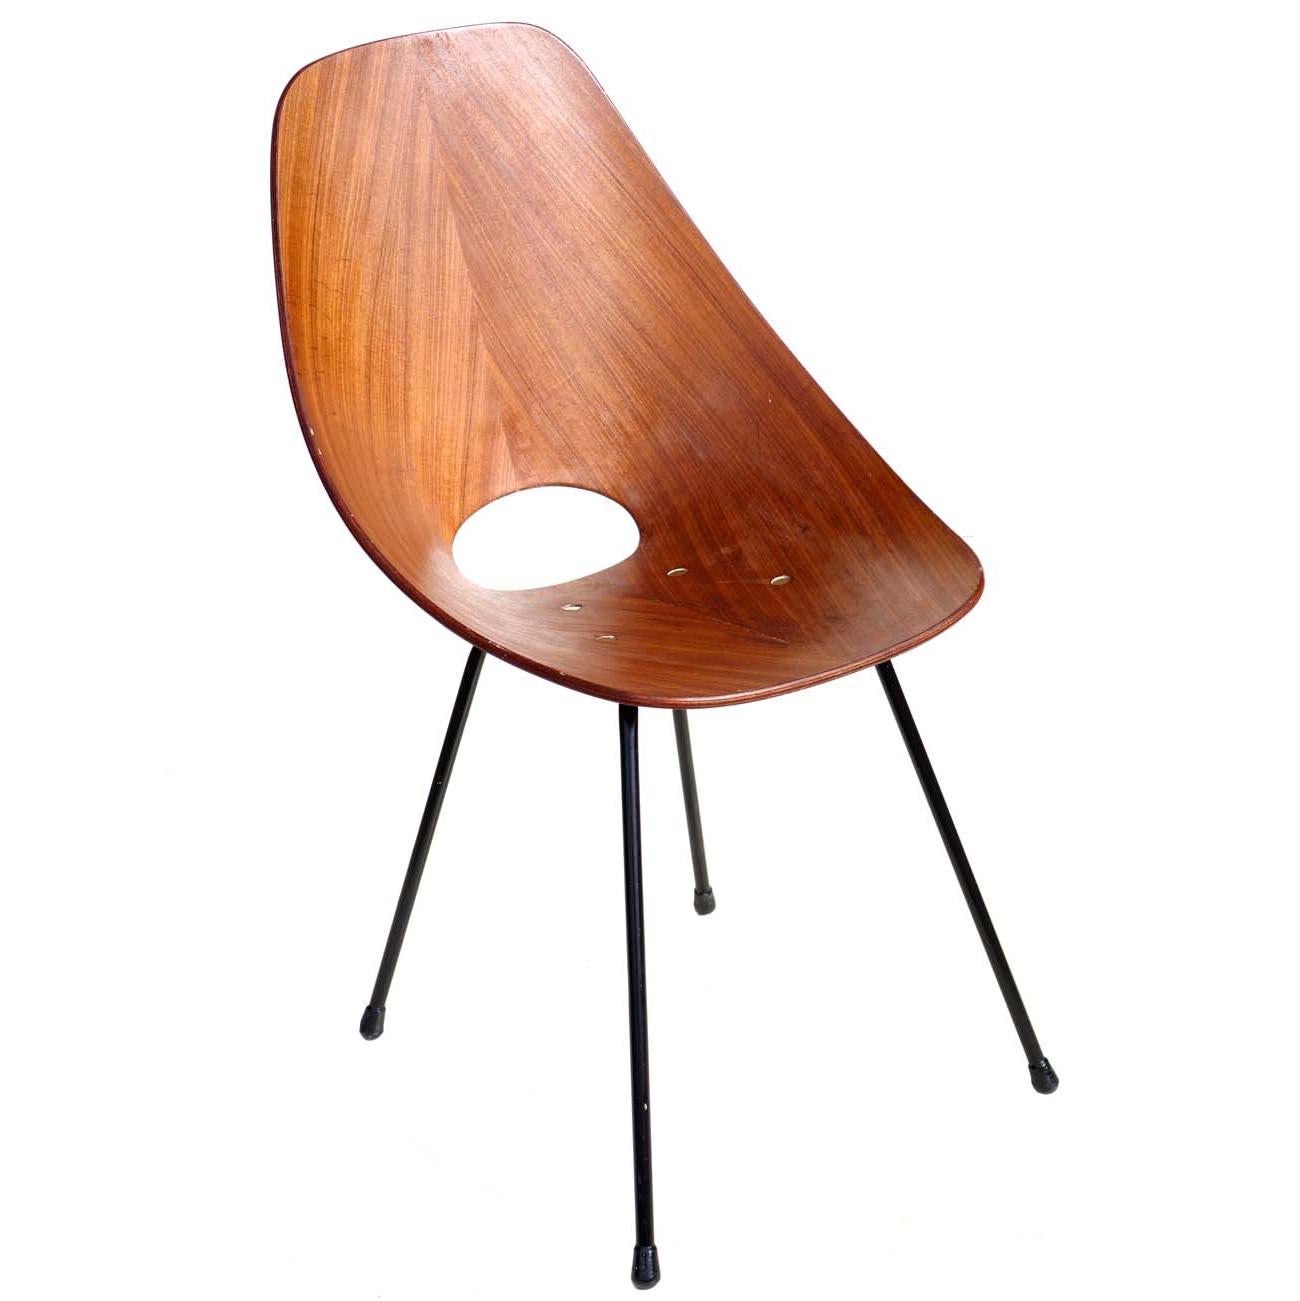 "Medea" by Vittorio Nobili Italian Midcentury Design Bentwood Chair